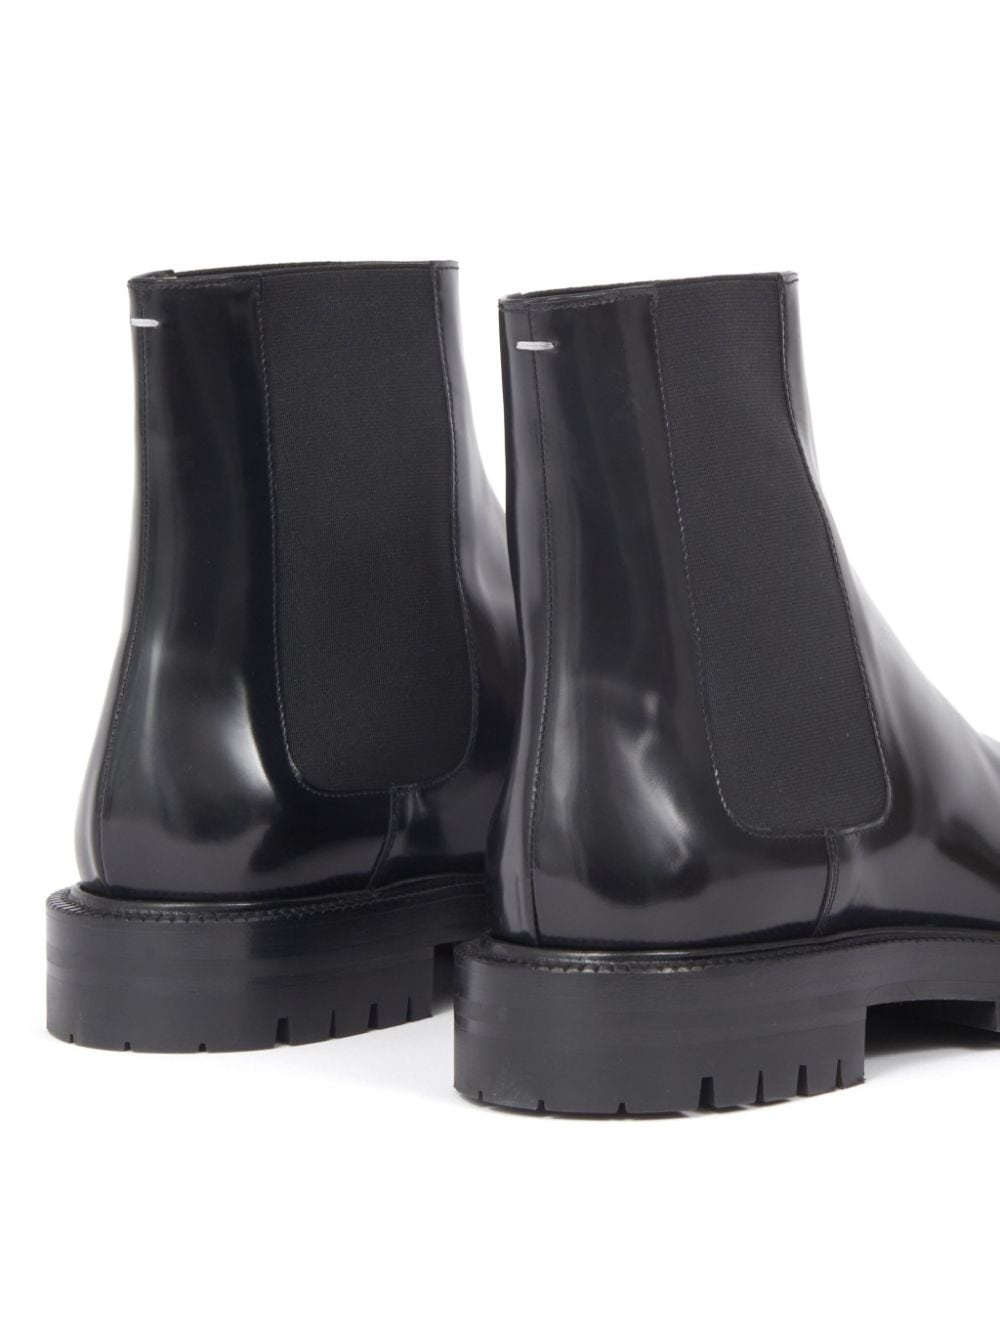 Tabi leather boots - 5